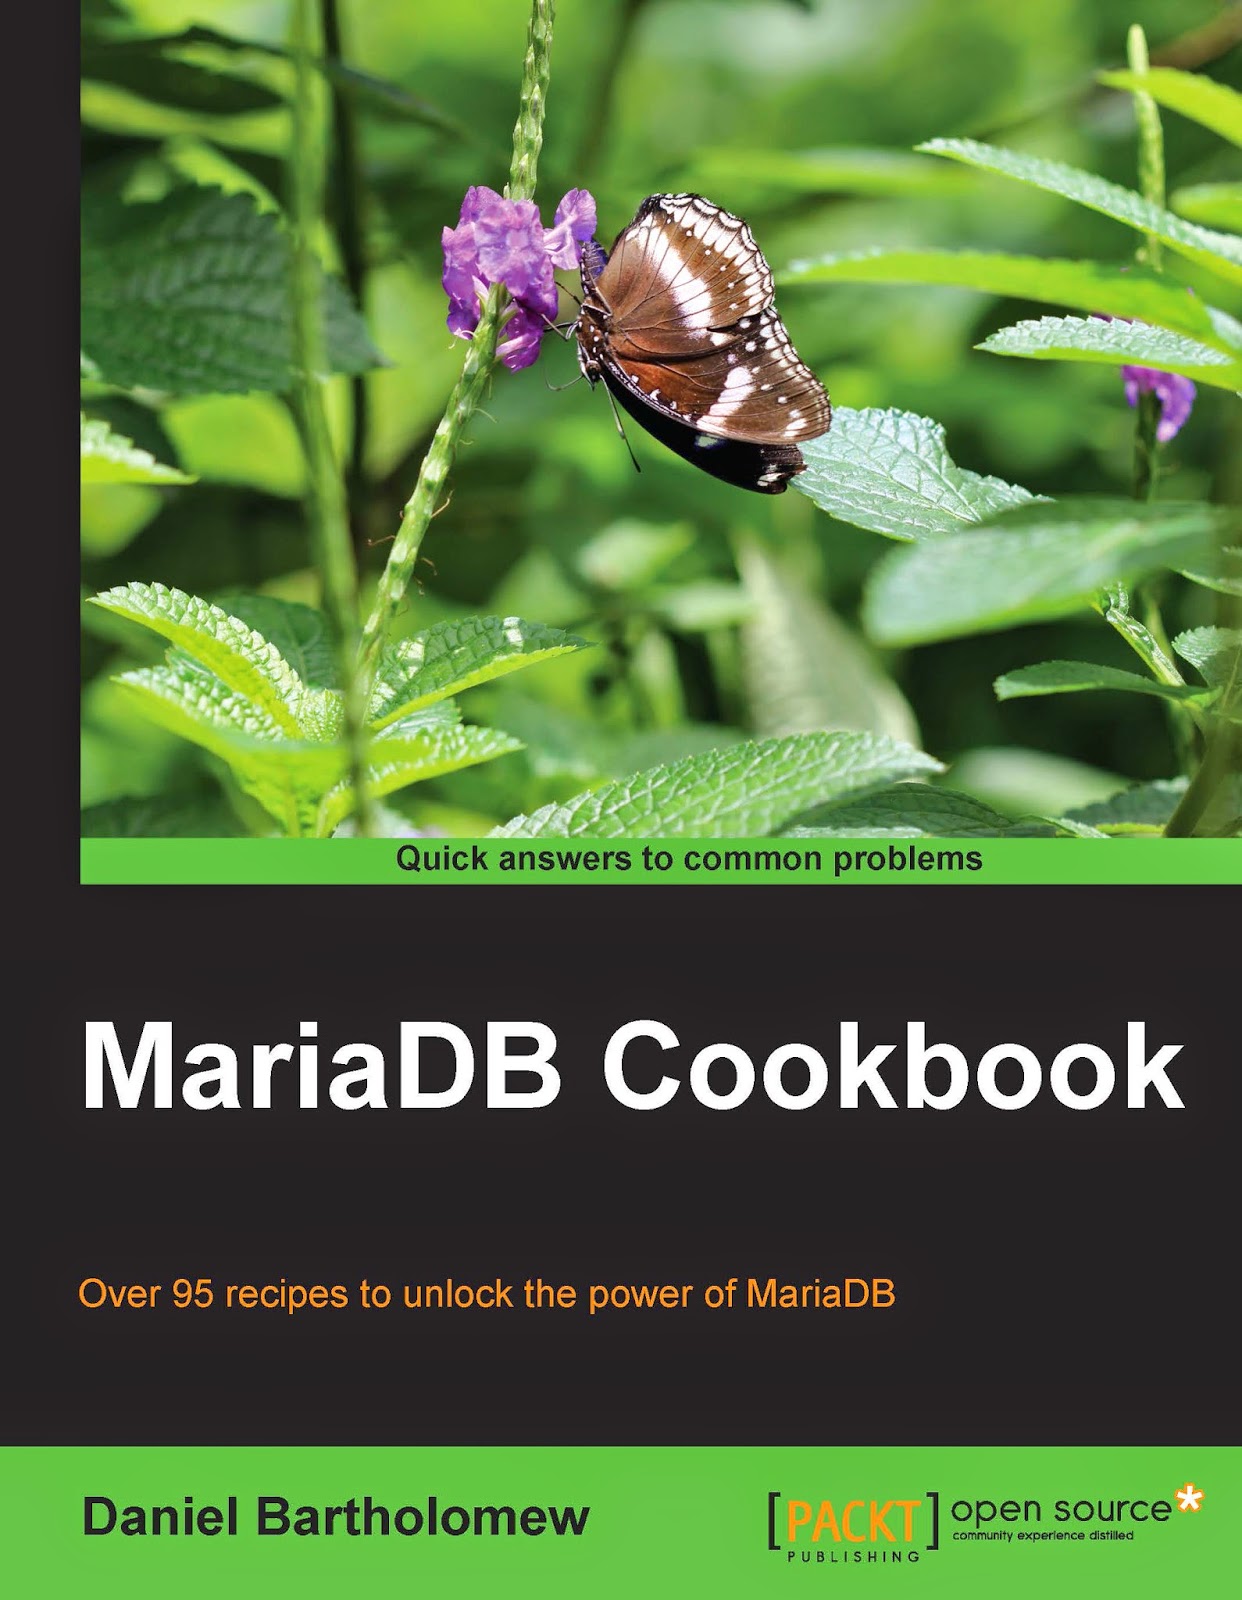 http://kingcheapebook.blogspot.com/2014/07/mariadb-cookbook.html